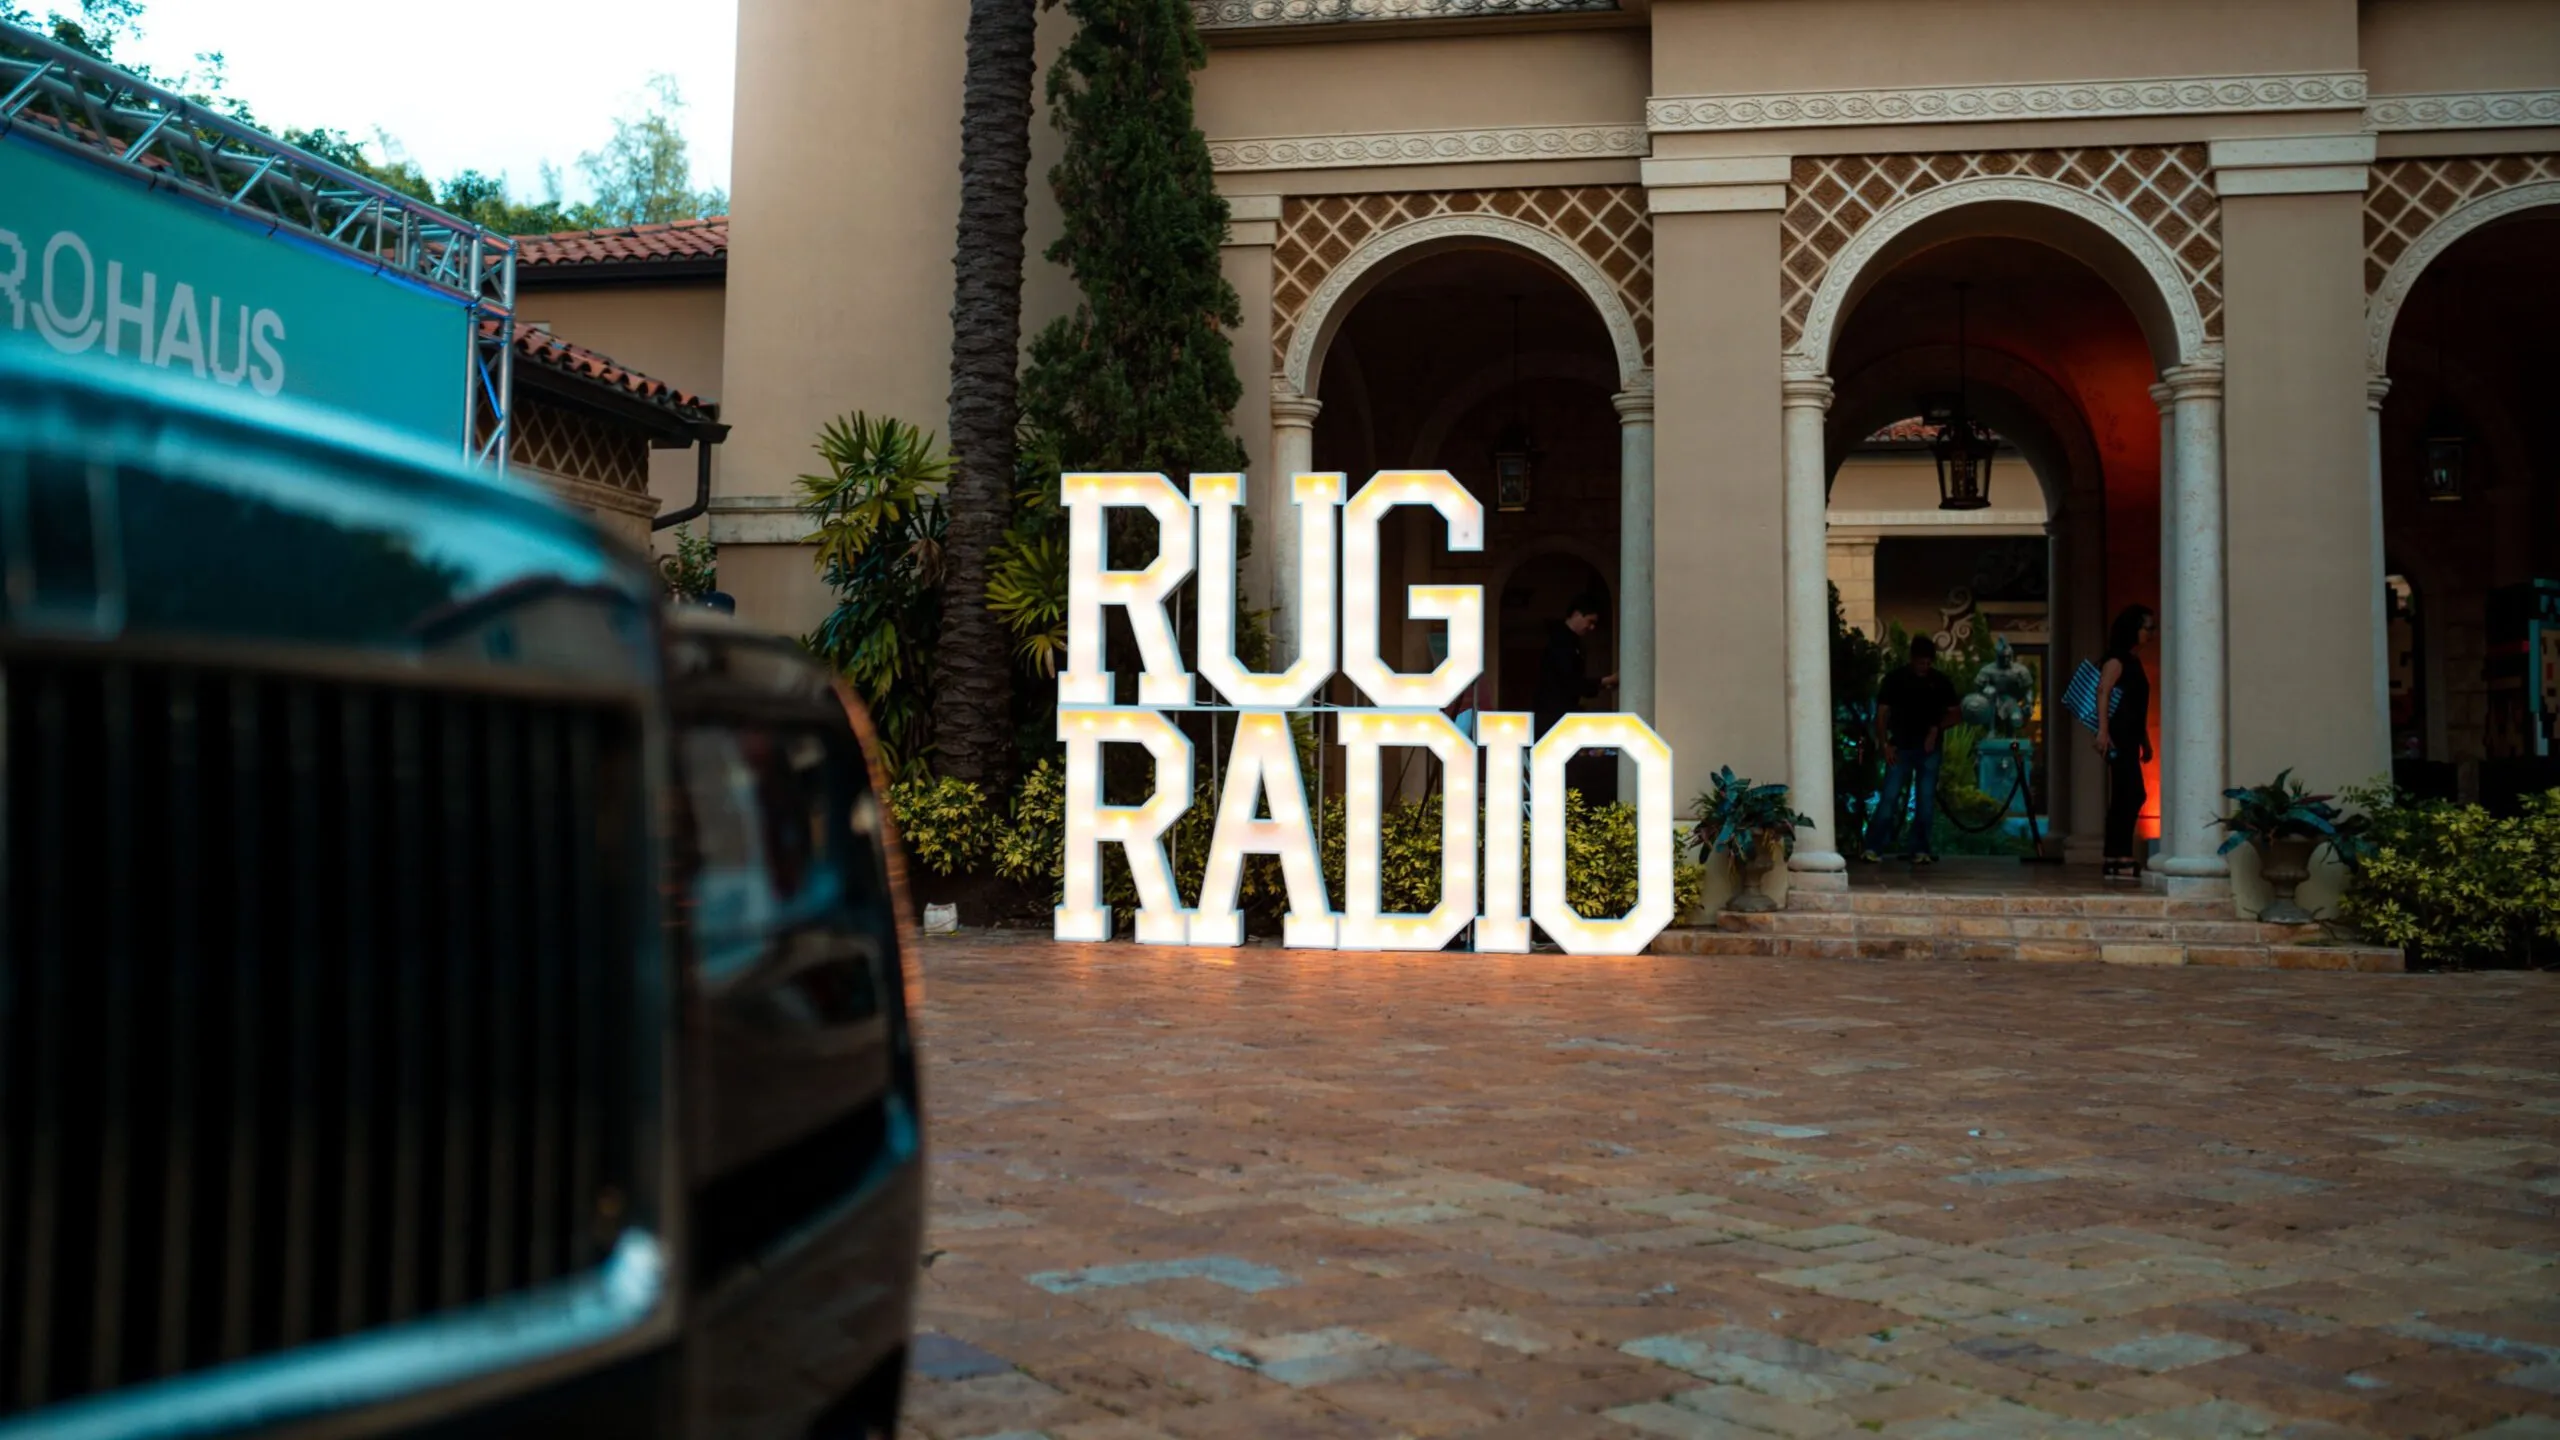 Rug Radio RHAUS in Miami. Photo: Rug Radio